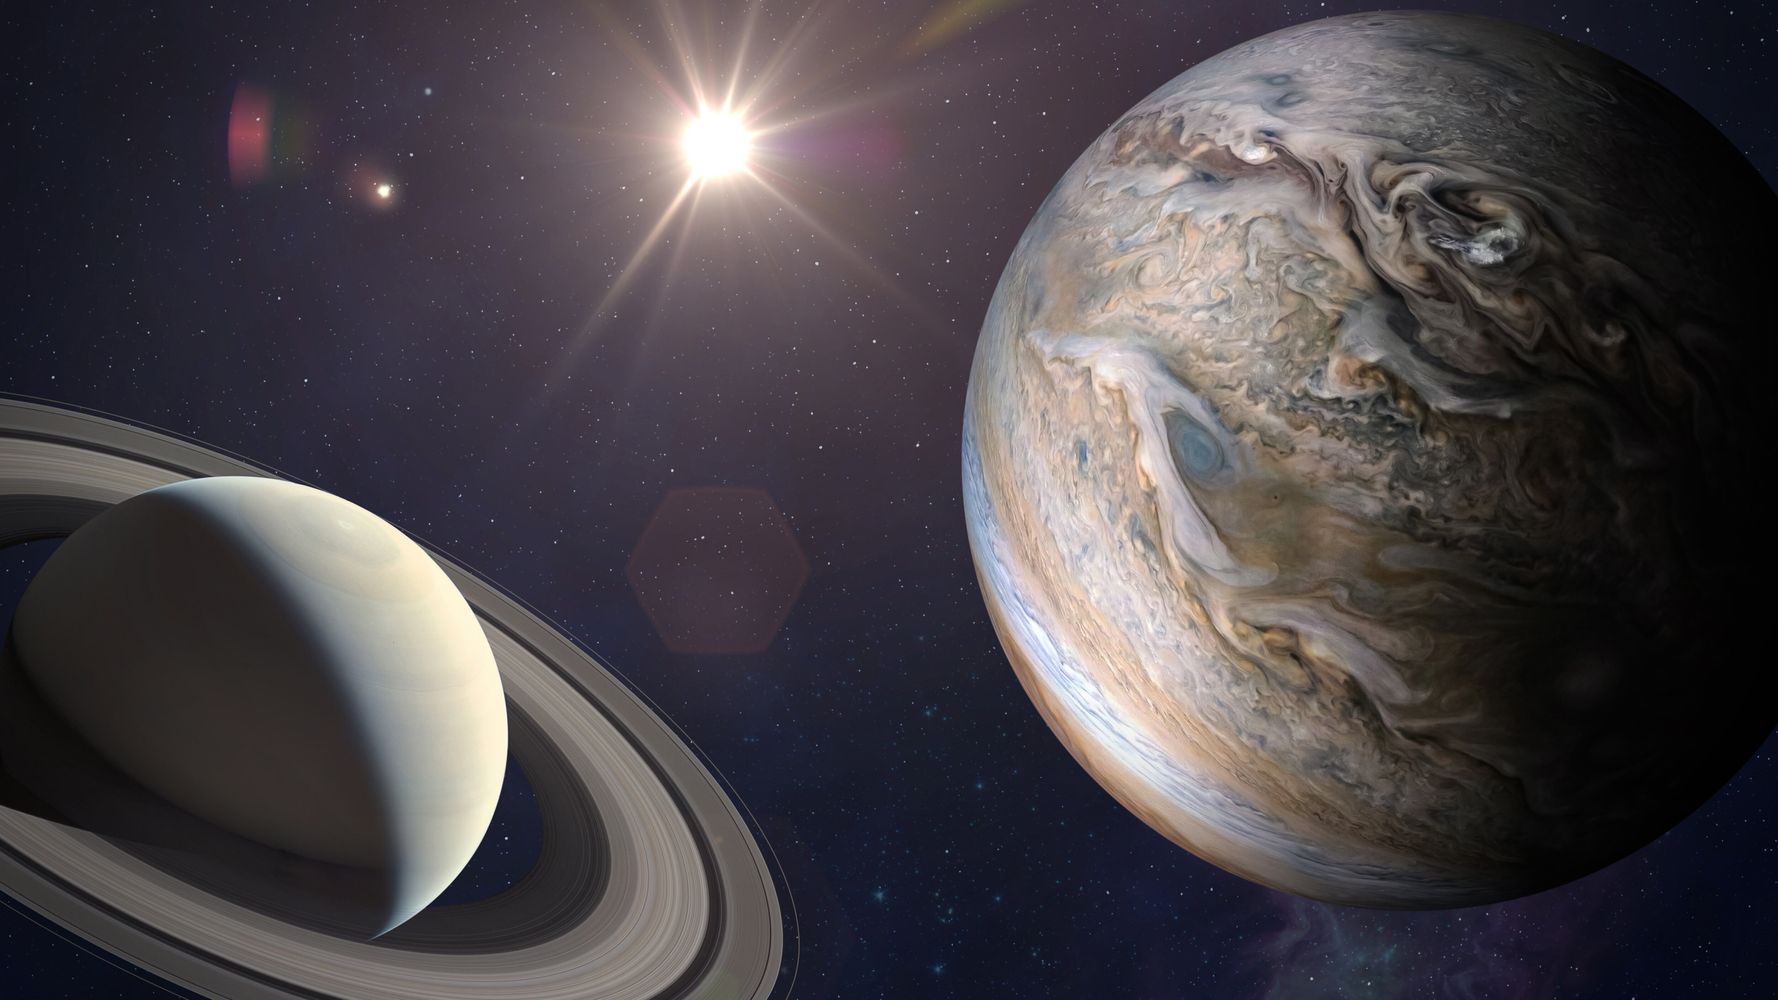 Jupiter and Saturn have appeared closer together since 1623